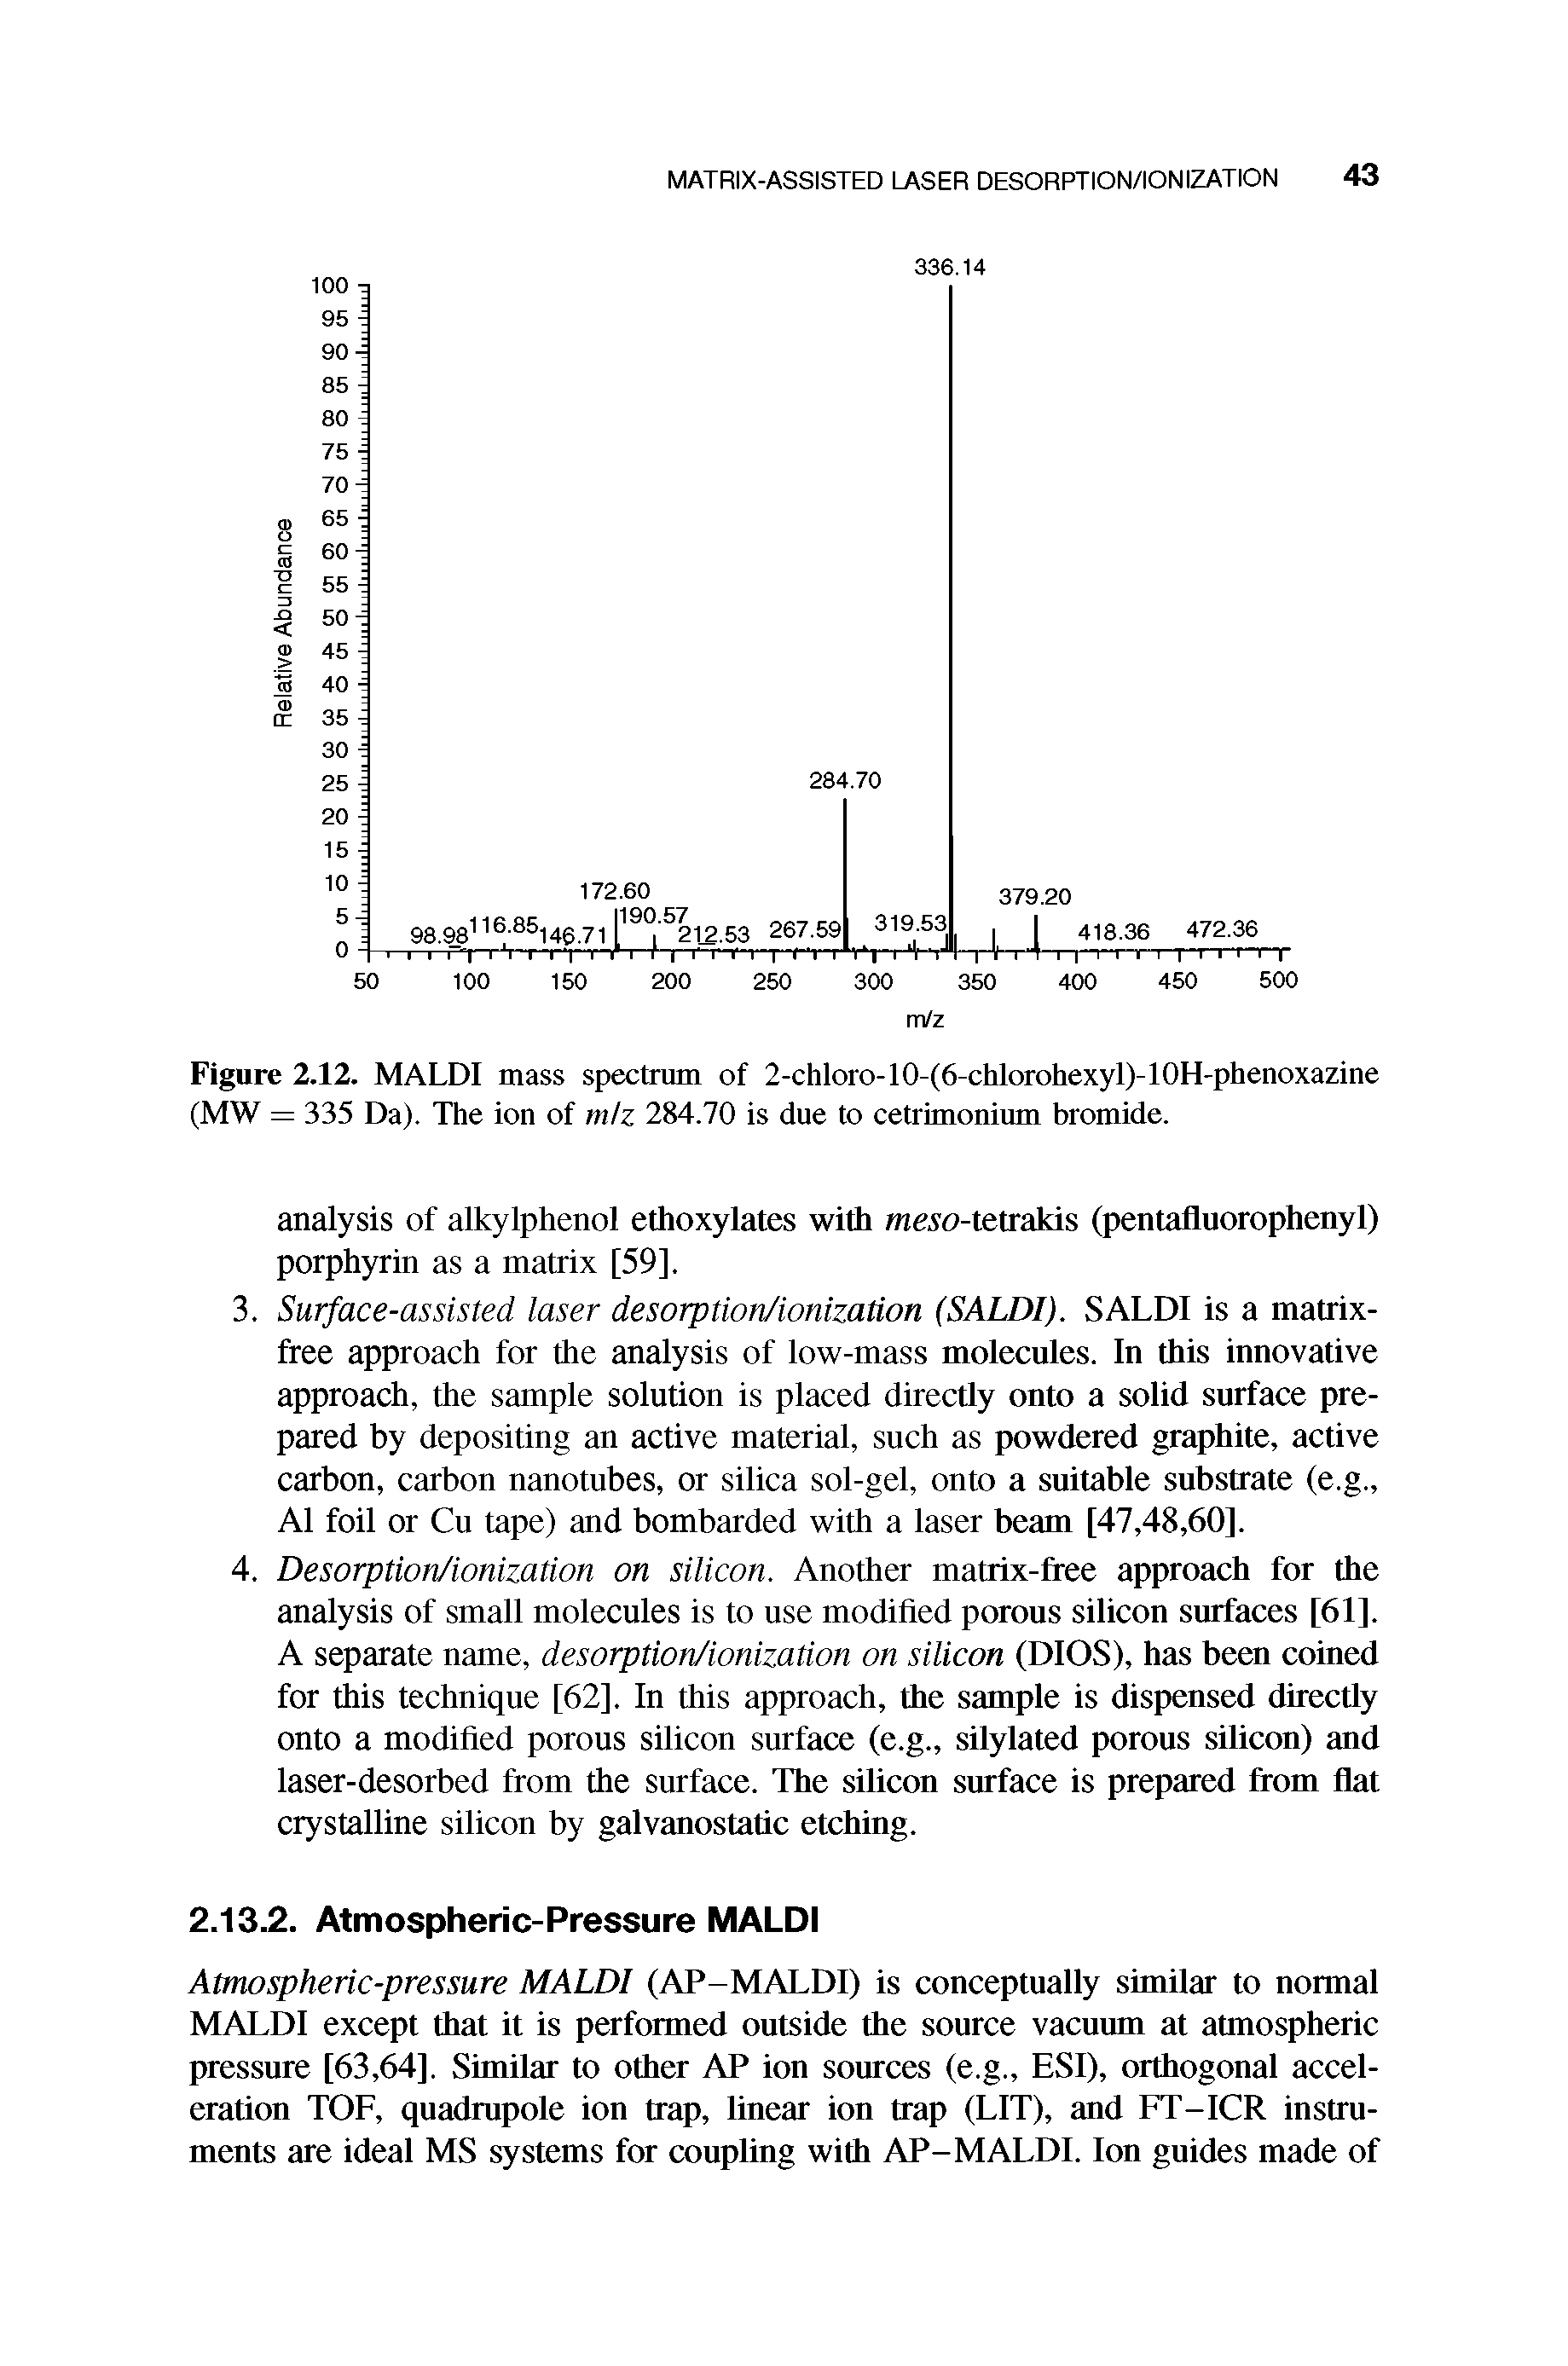 Figure 2.12. MALDI mass spectrum of 2-chloro-10-(6-chlorohexyl)-10H-phenoxazine (MW = 335 Da). The ion of miz 284.70 is due to cetrimonium bromide.